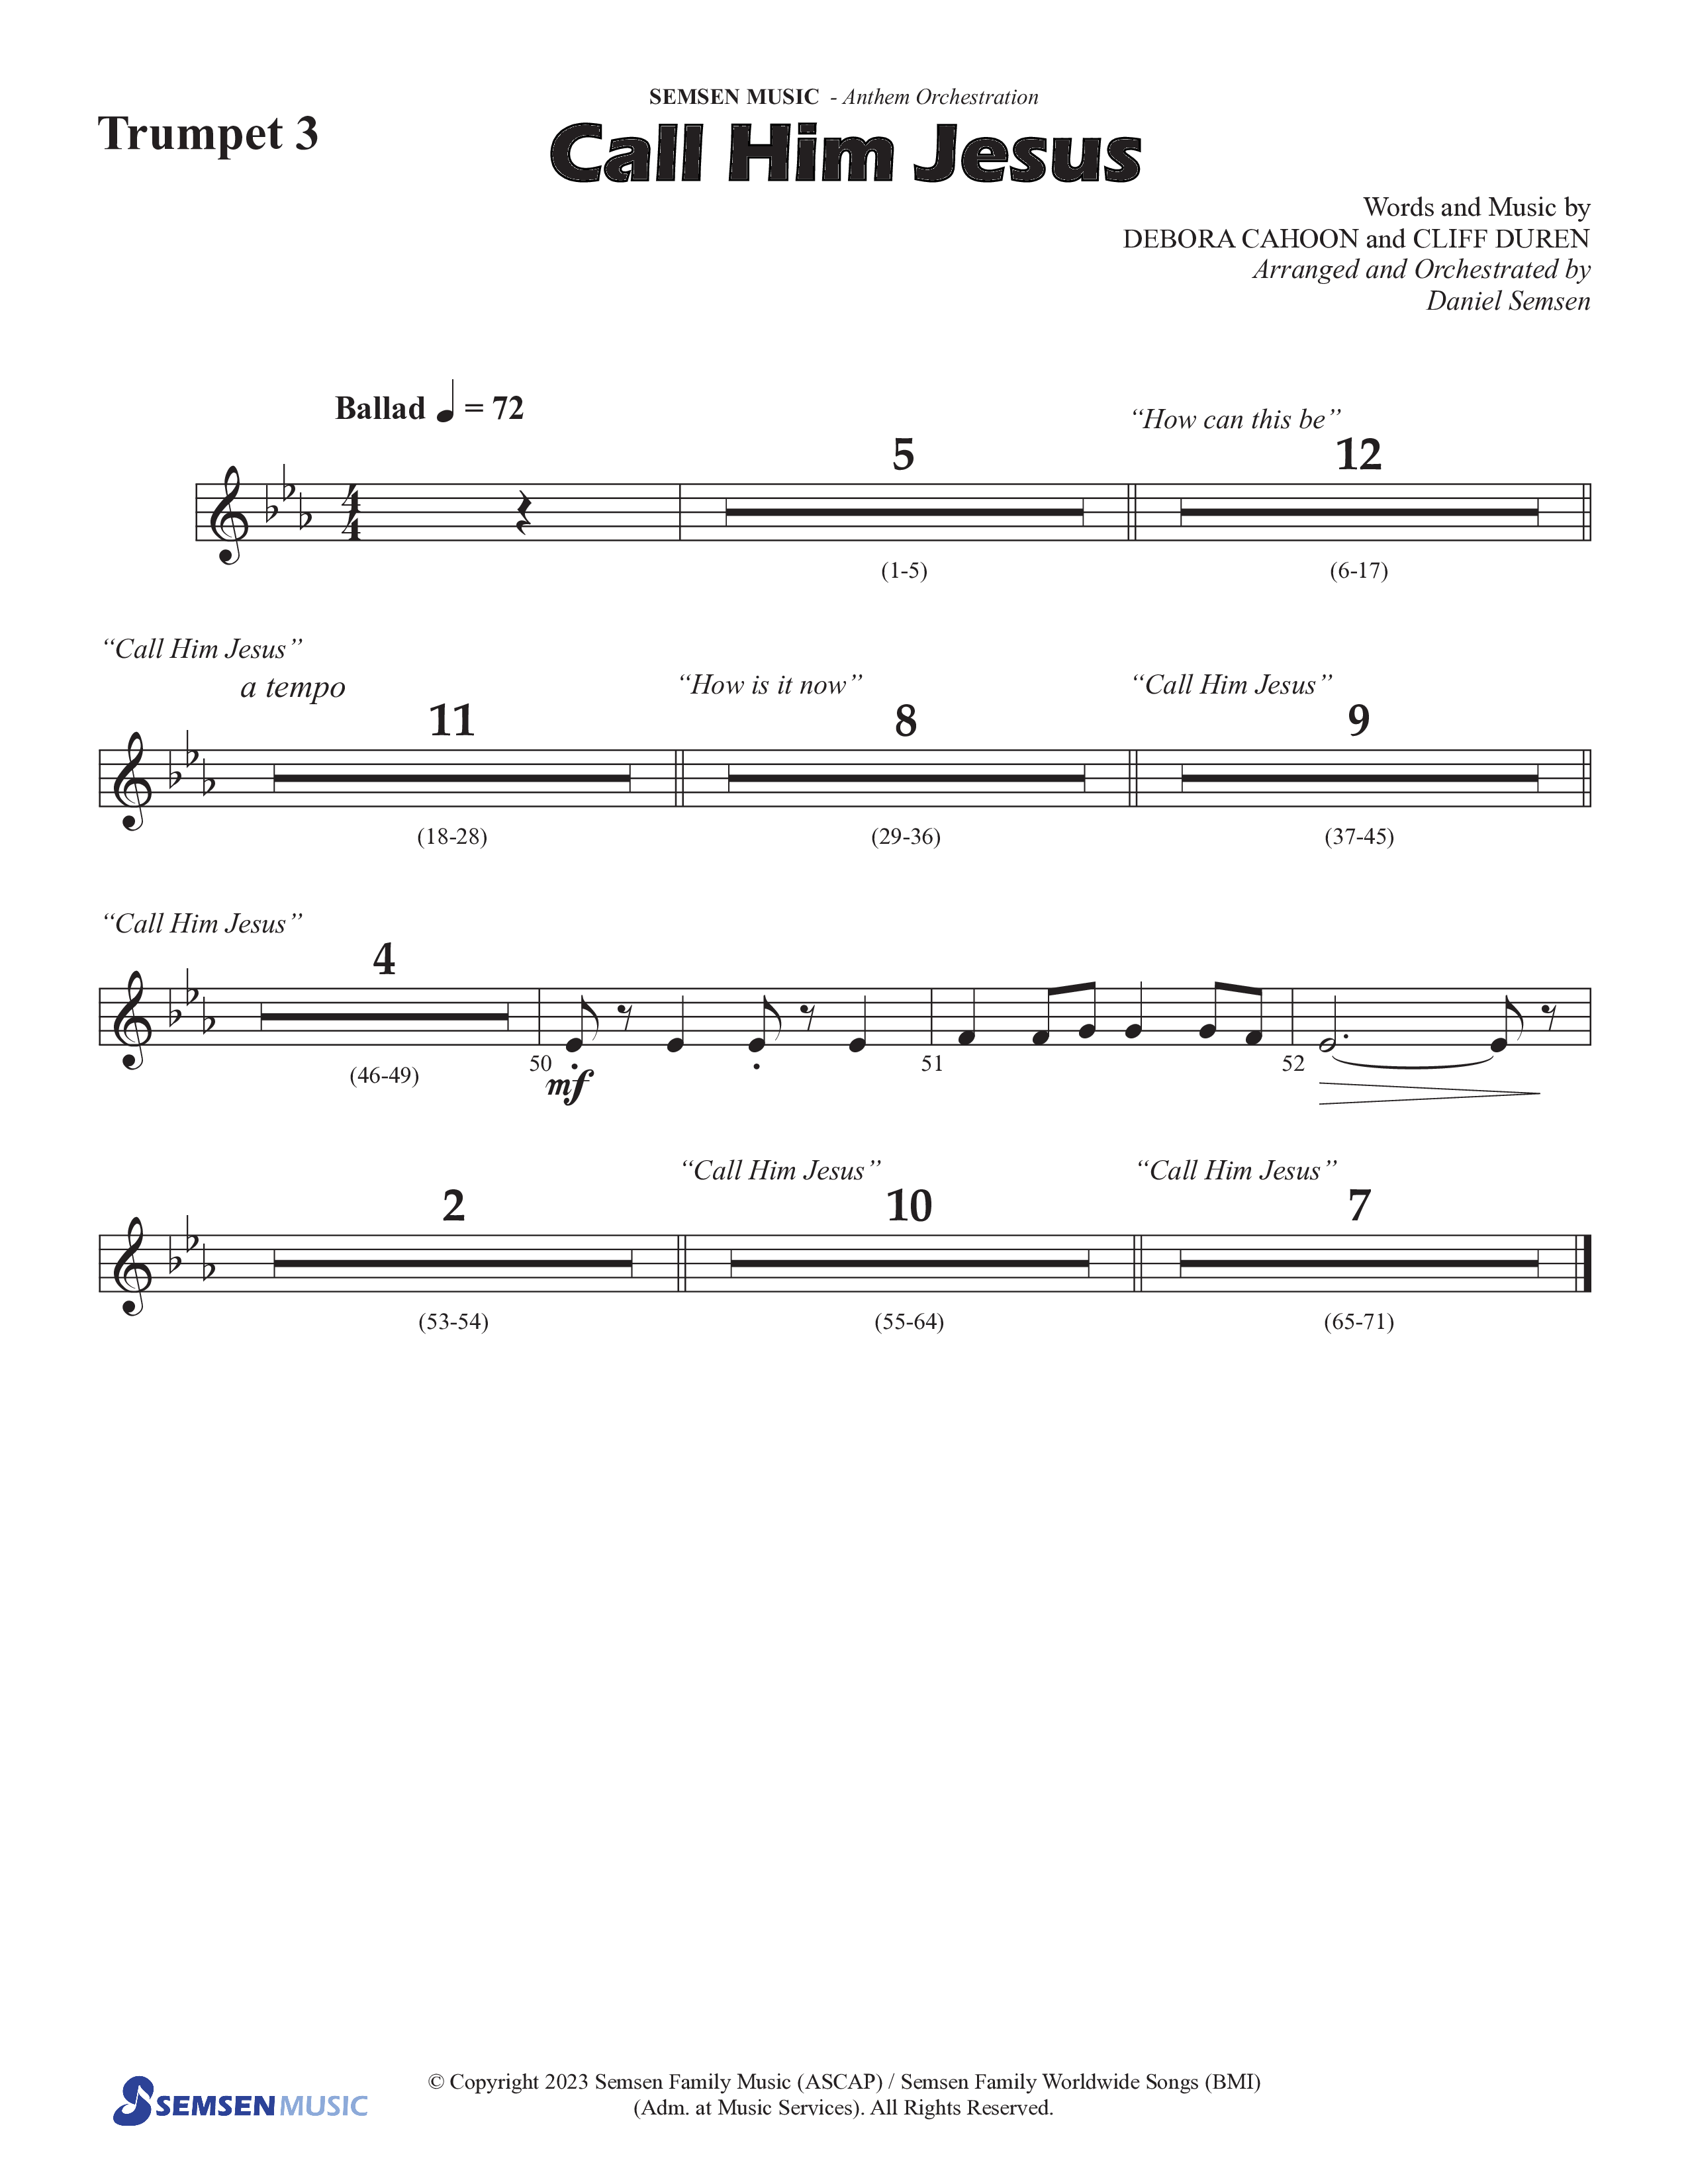 Call Him Jesus (Choral Anthem SATB) Trumpet 3 (Semsen Music / Arr. Daniel Semsen)